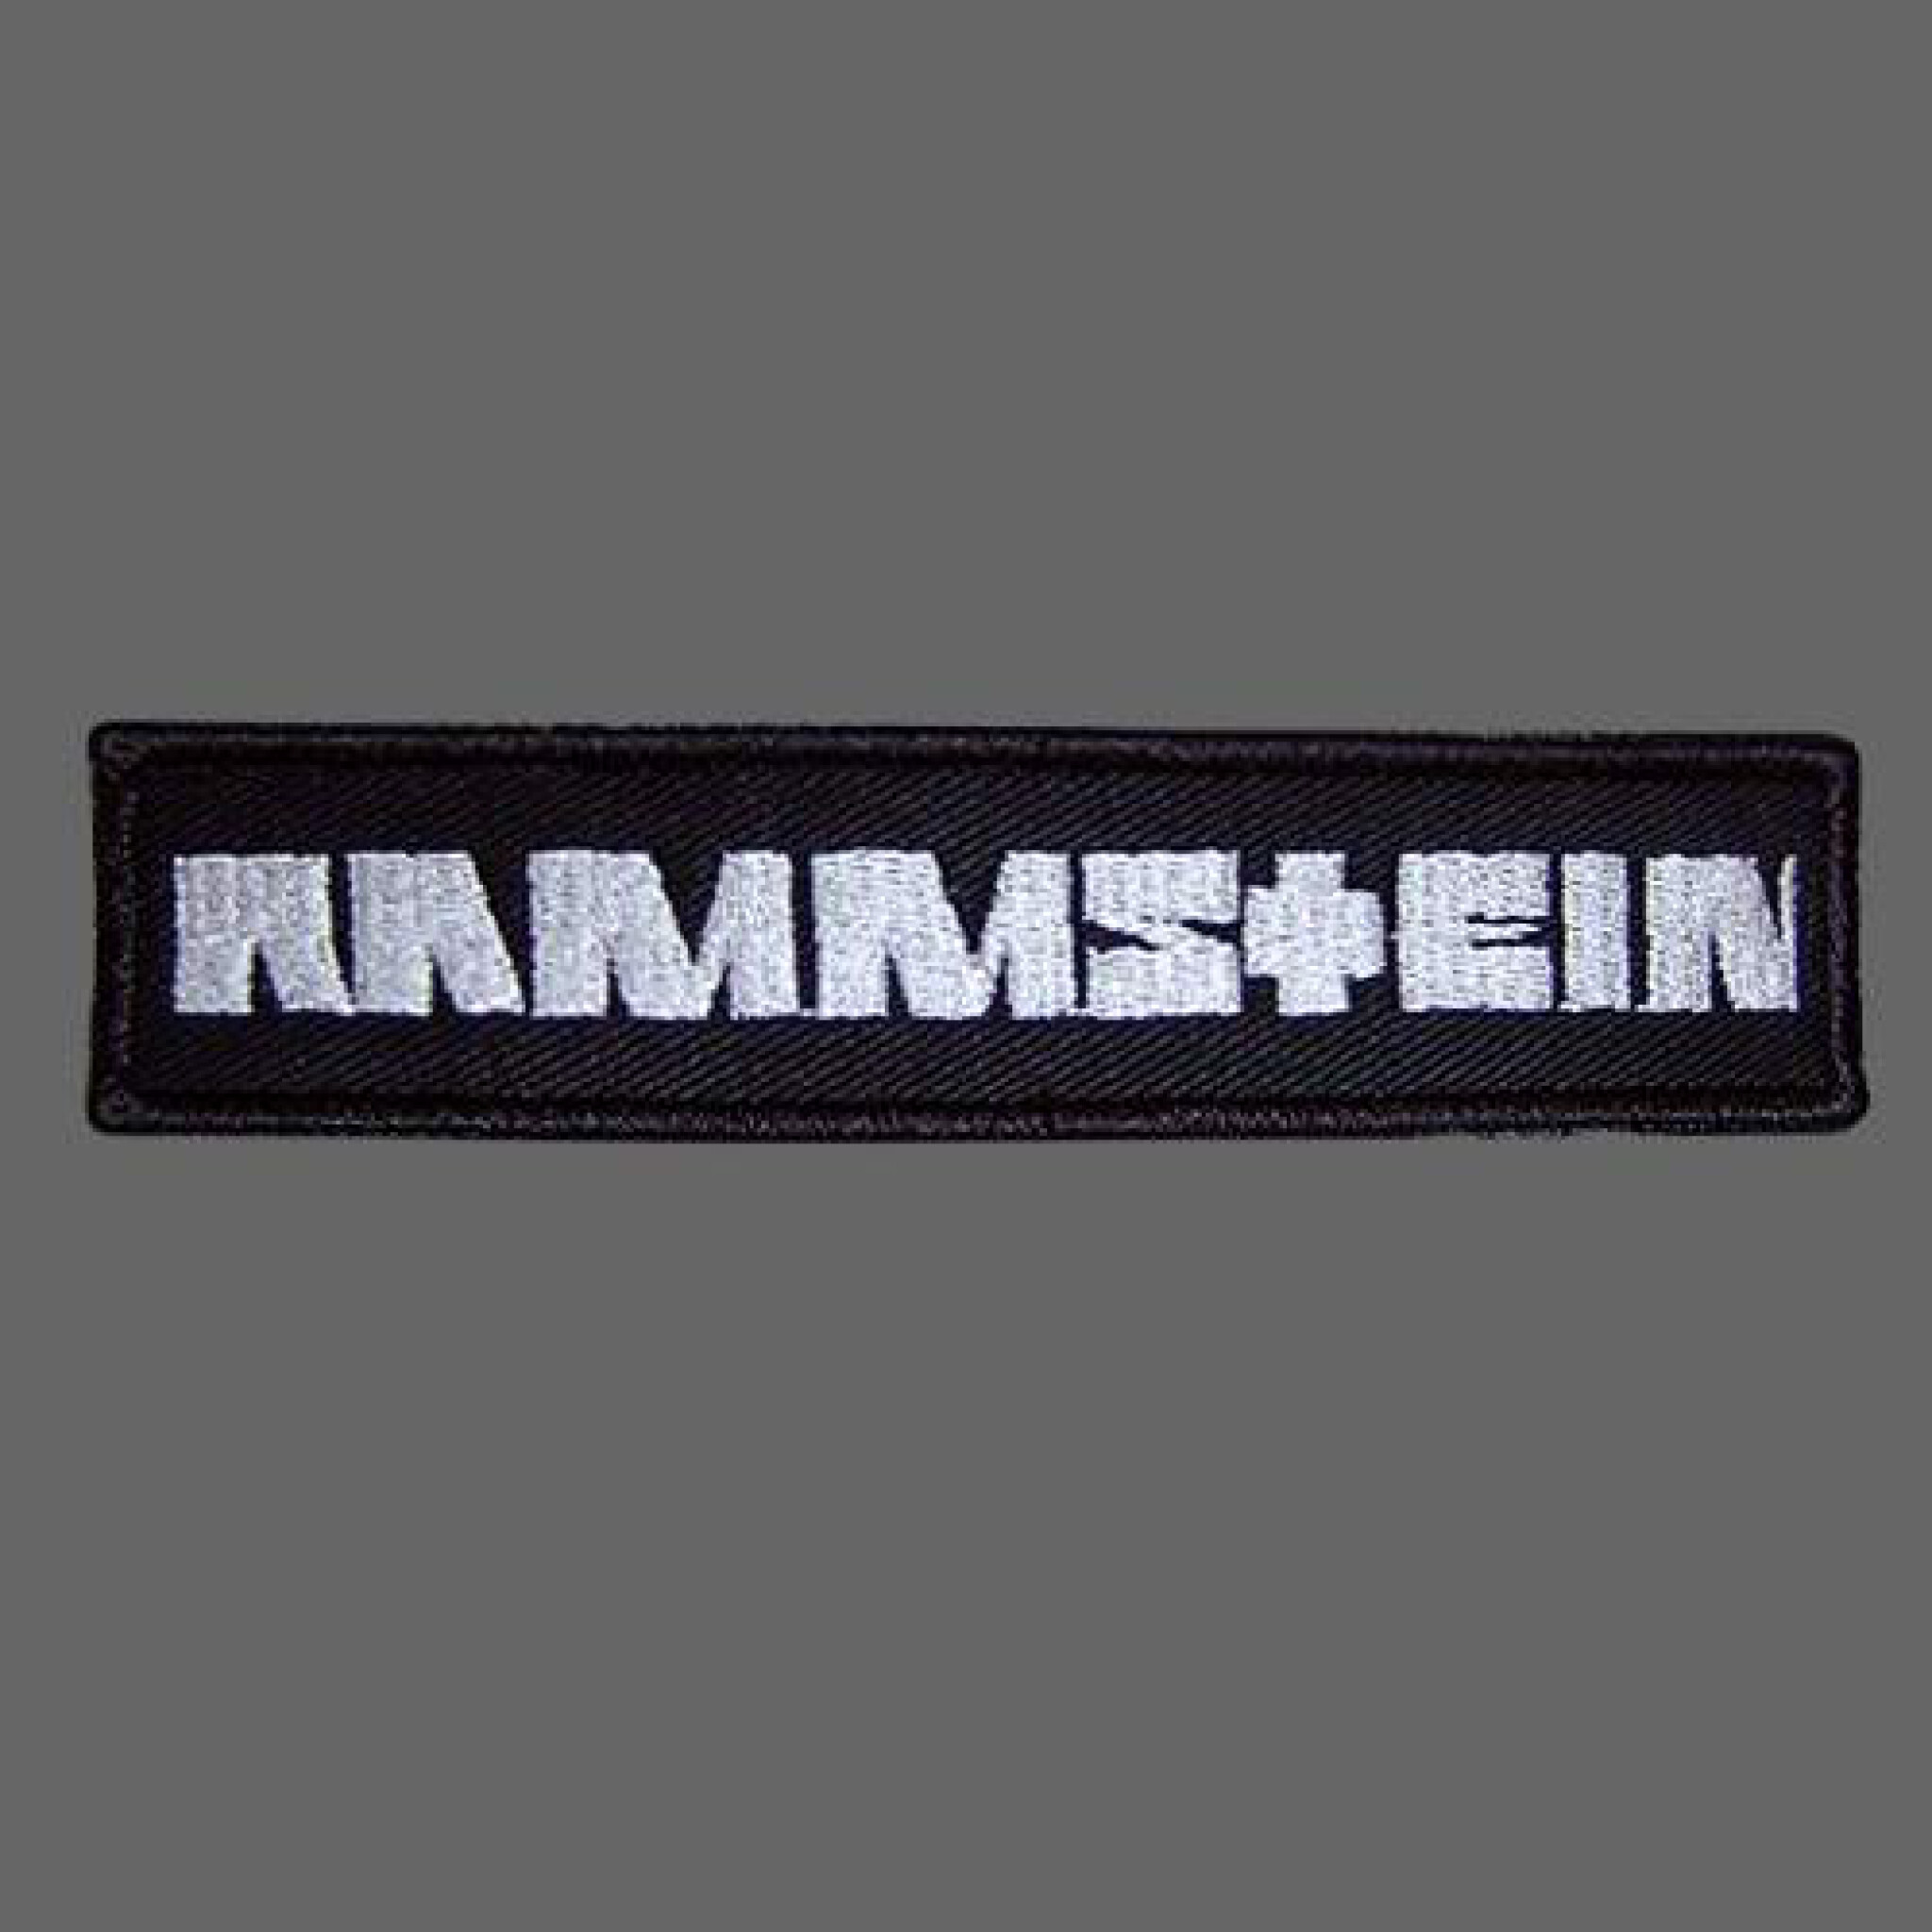 RAMMSTEIN logo Aufnäher Patch 80mm IX/20